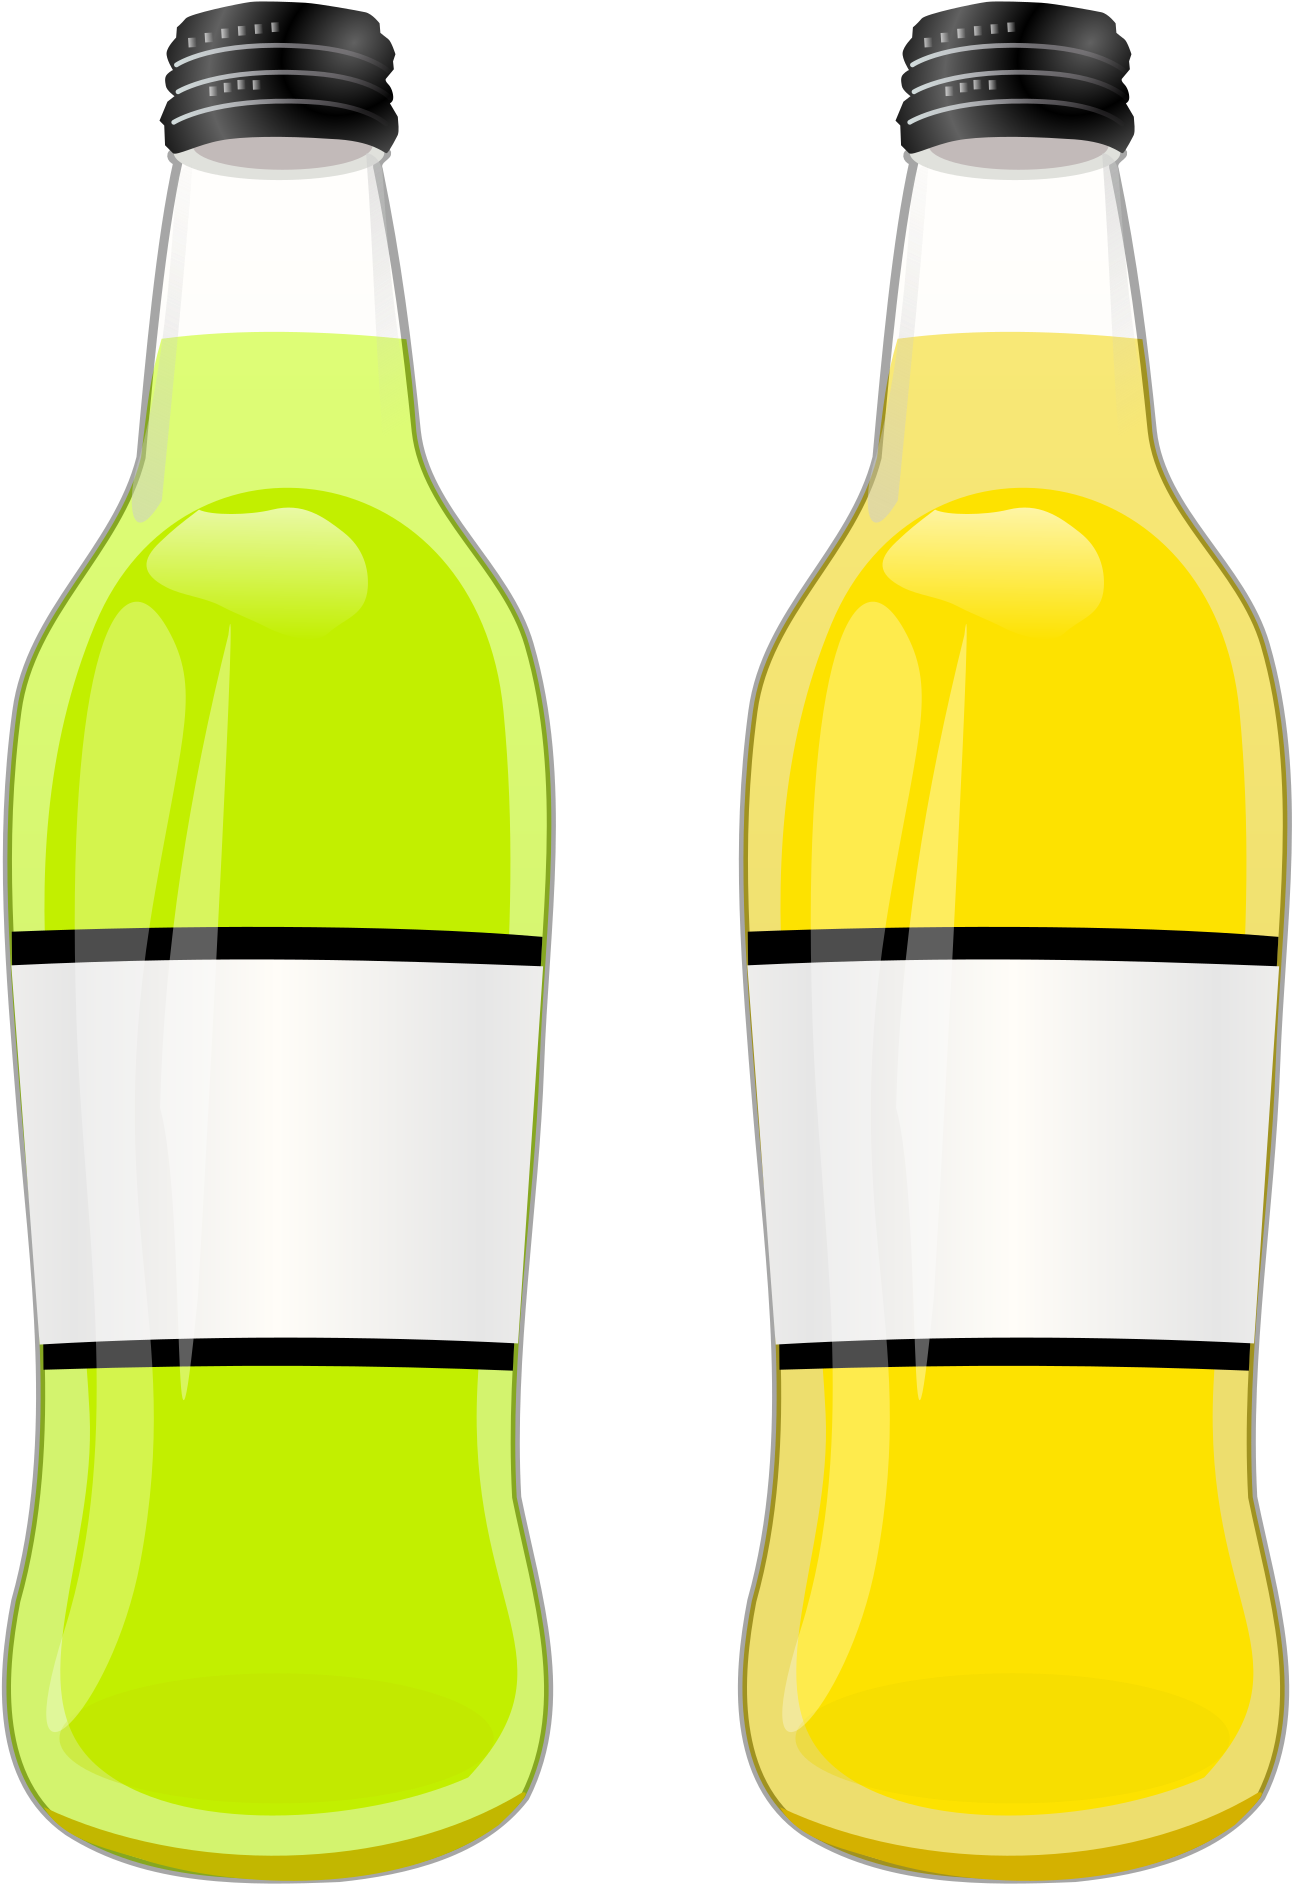 Soda Pop Bottles Svg Clip Arts 408 X 595 Px (408x595), Png Download